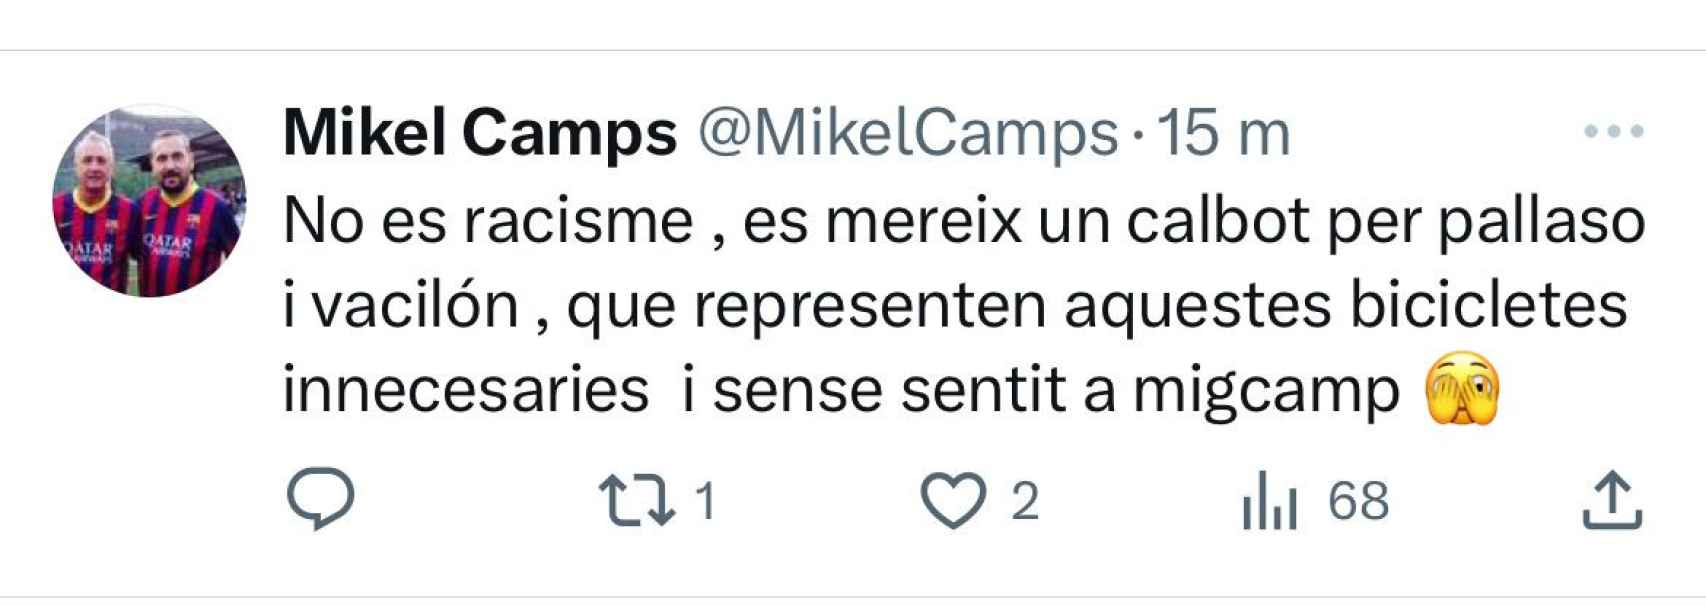 El ataque de Miquel Camps, directivo del Barça, contra Vinicius